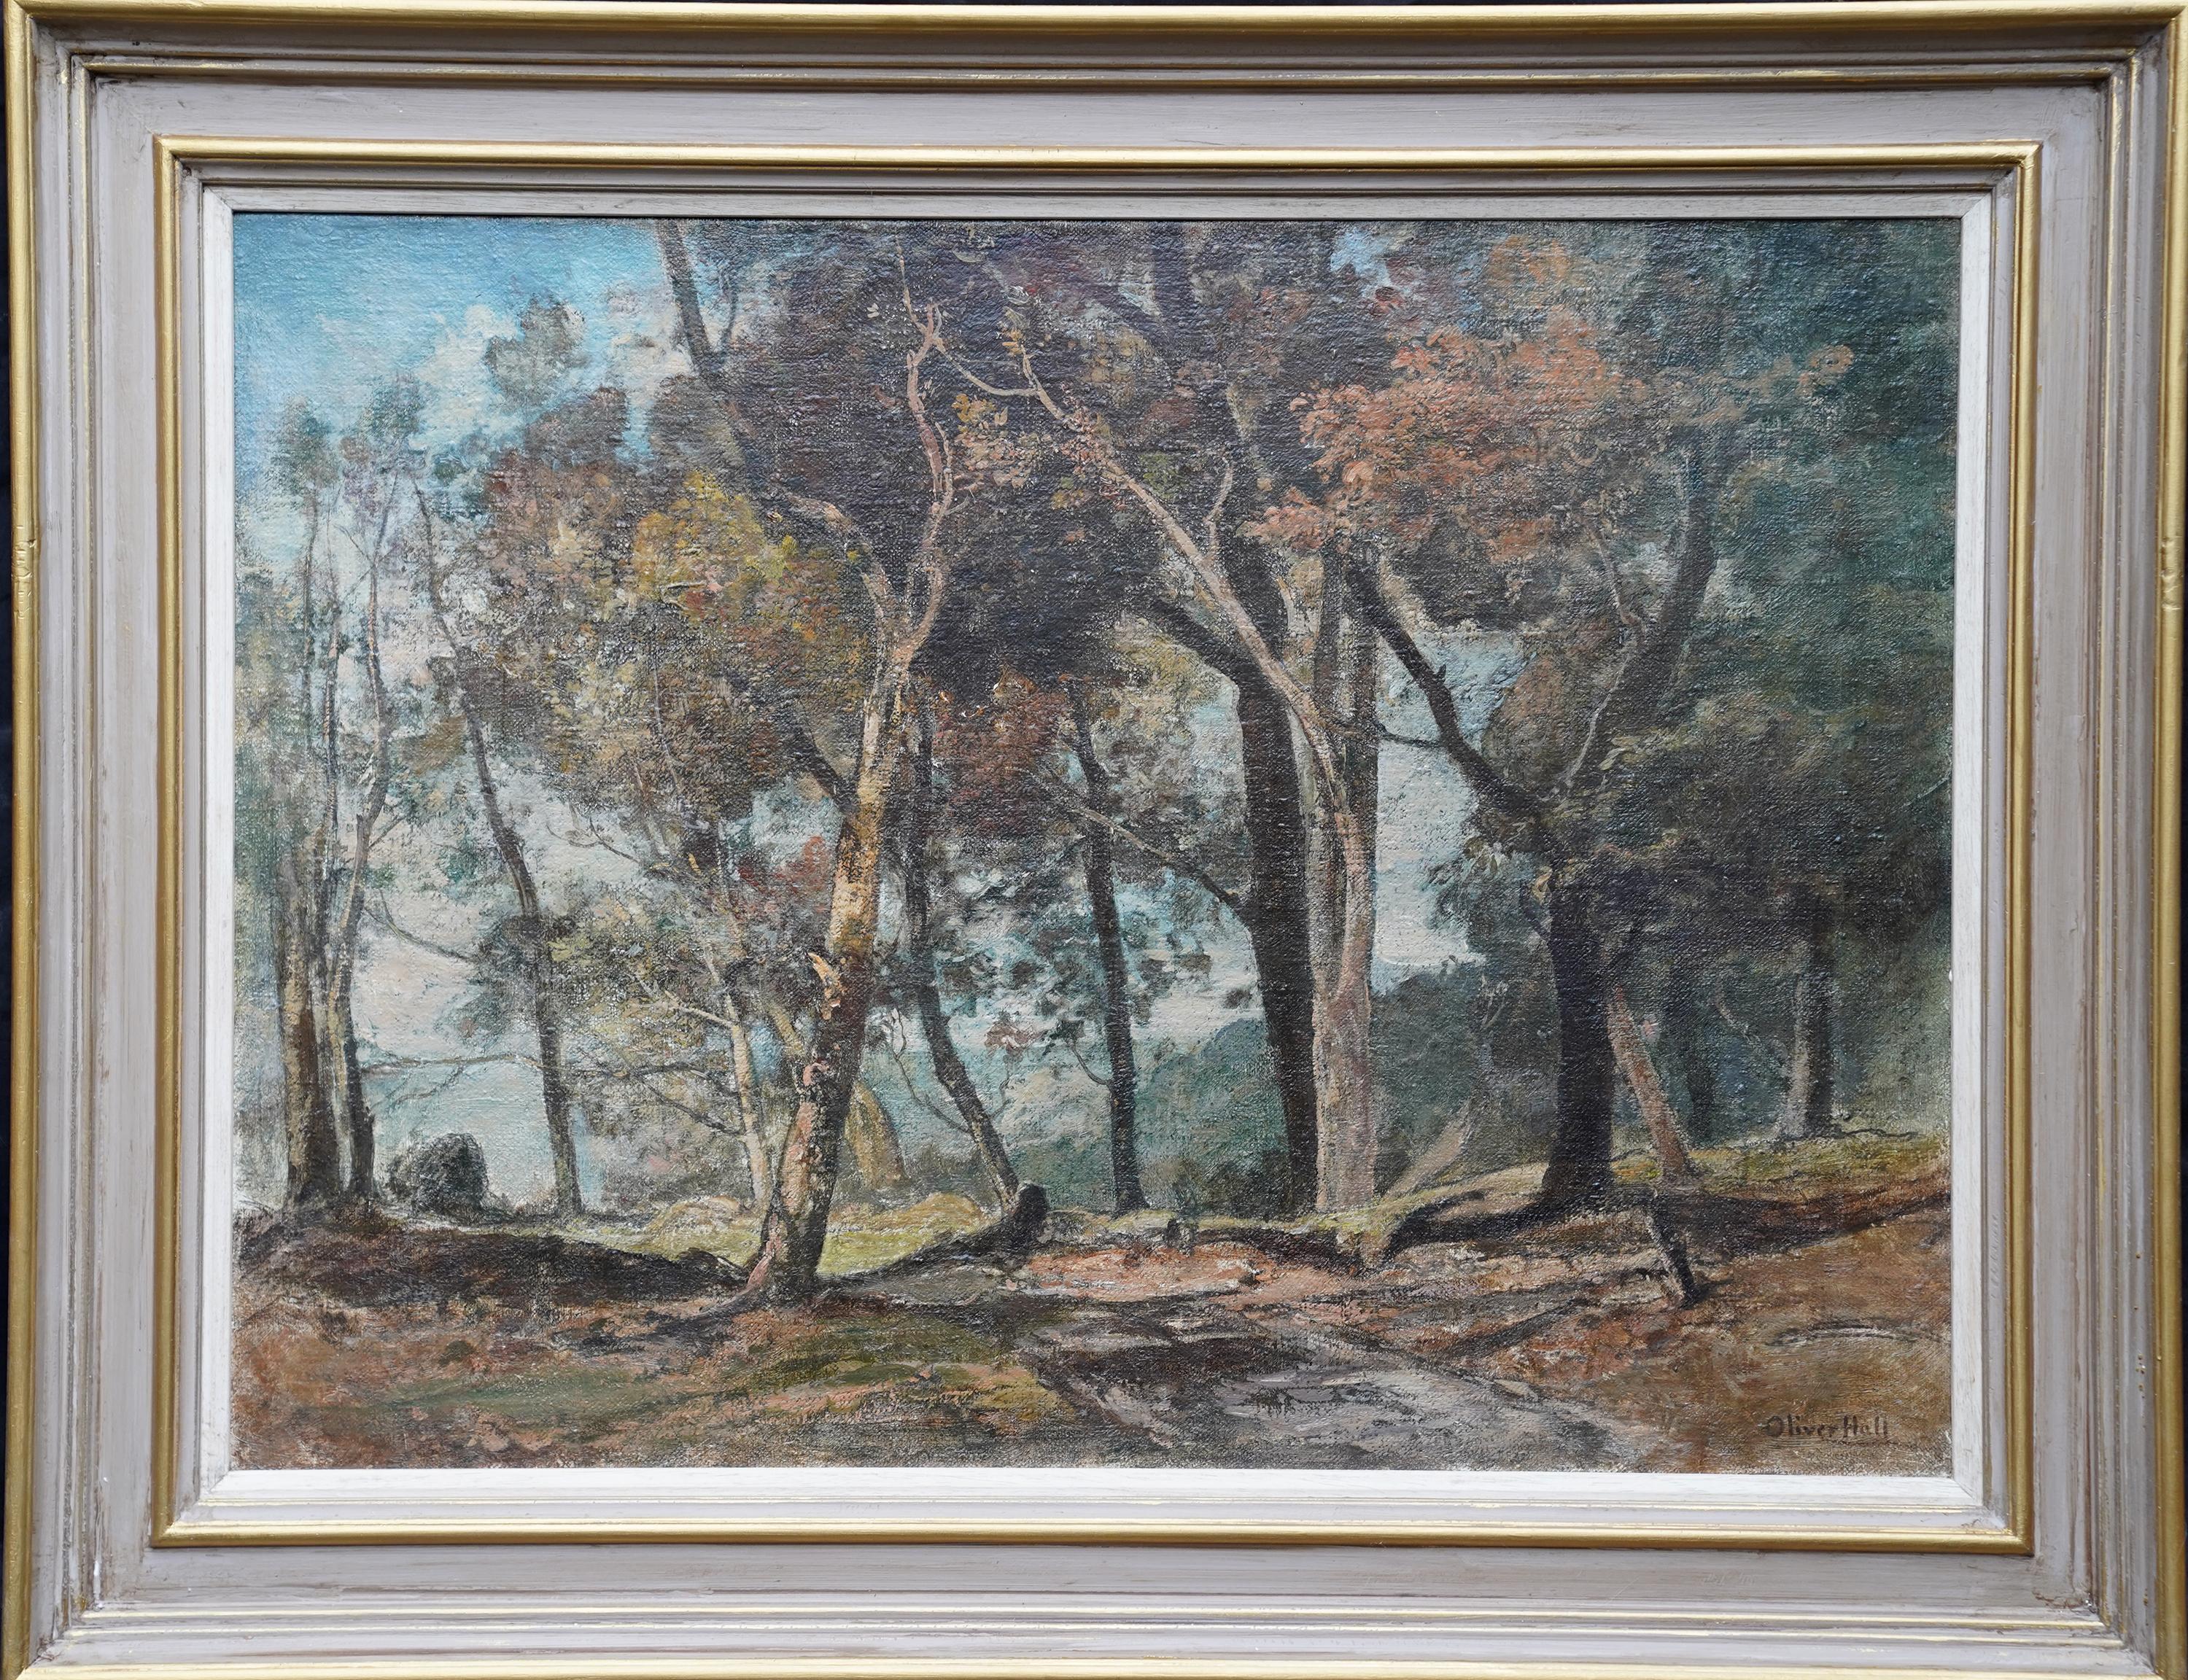 Oliver Hall, R.A., R.E., R.S.W. Landscape Painting – Woodland Path – Ölgemälde des britischen Impressionismus, 1930